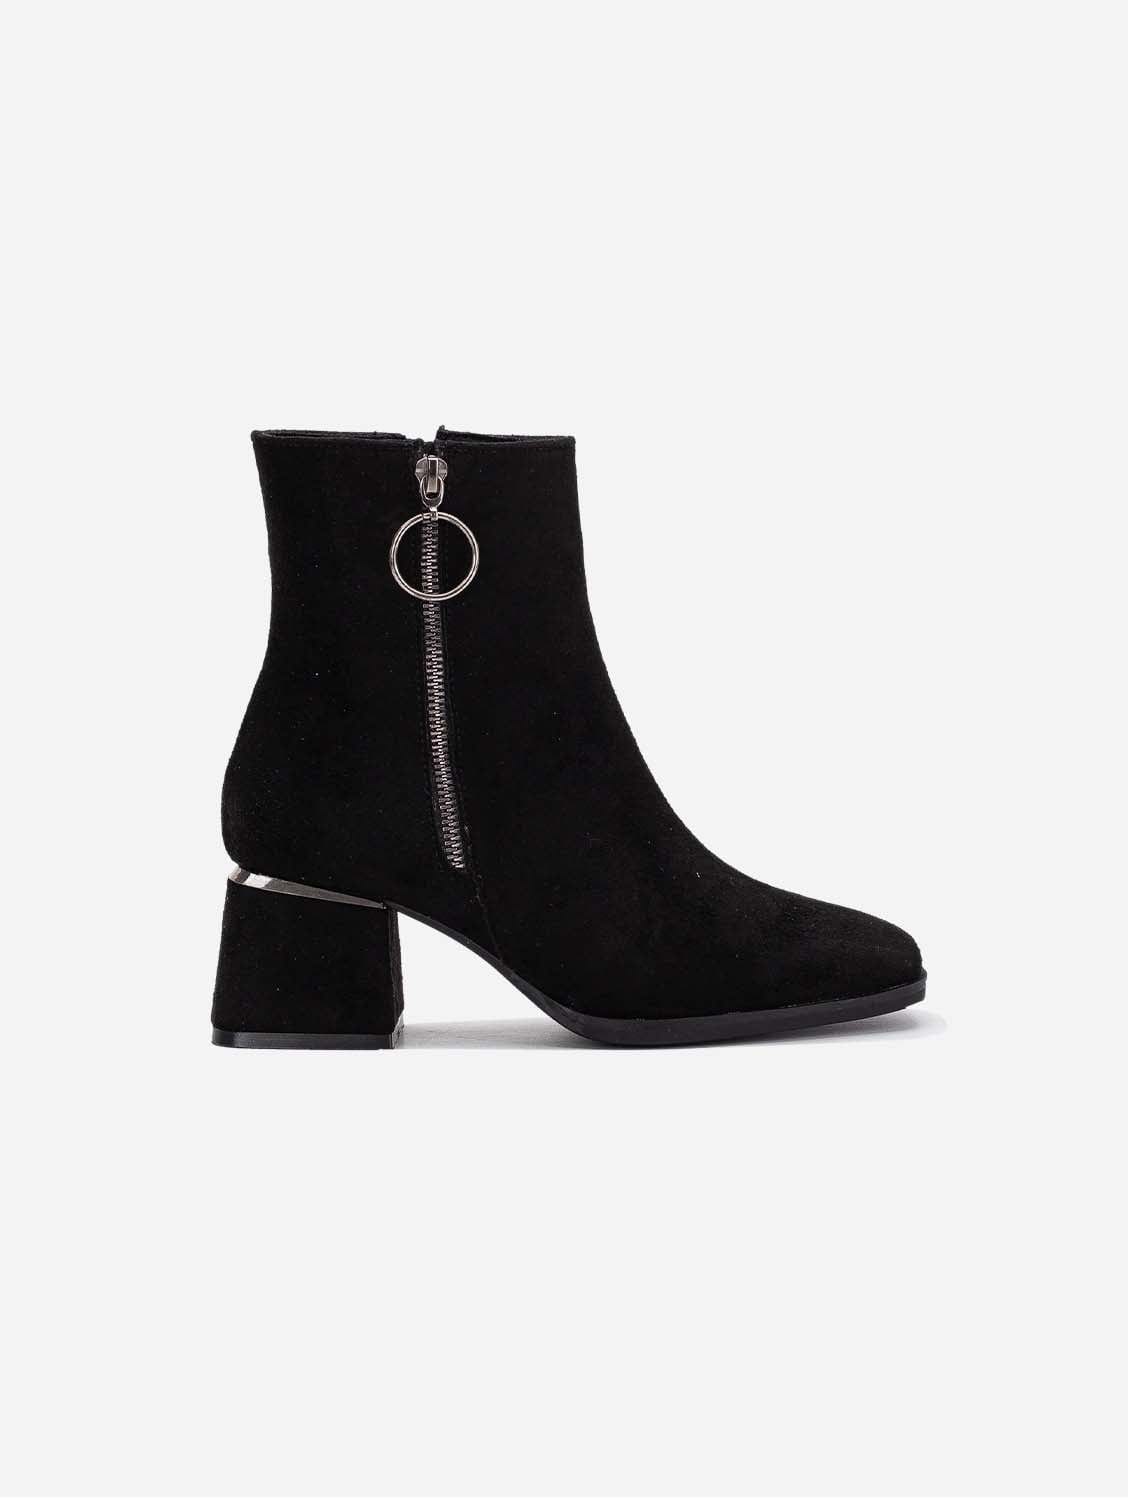 Prologue Shoes Esme Vegan Suede Leather Ankle Boots | Black 5.5 US/3 UK/22CM/36